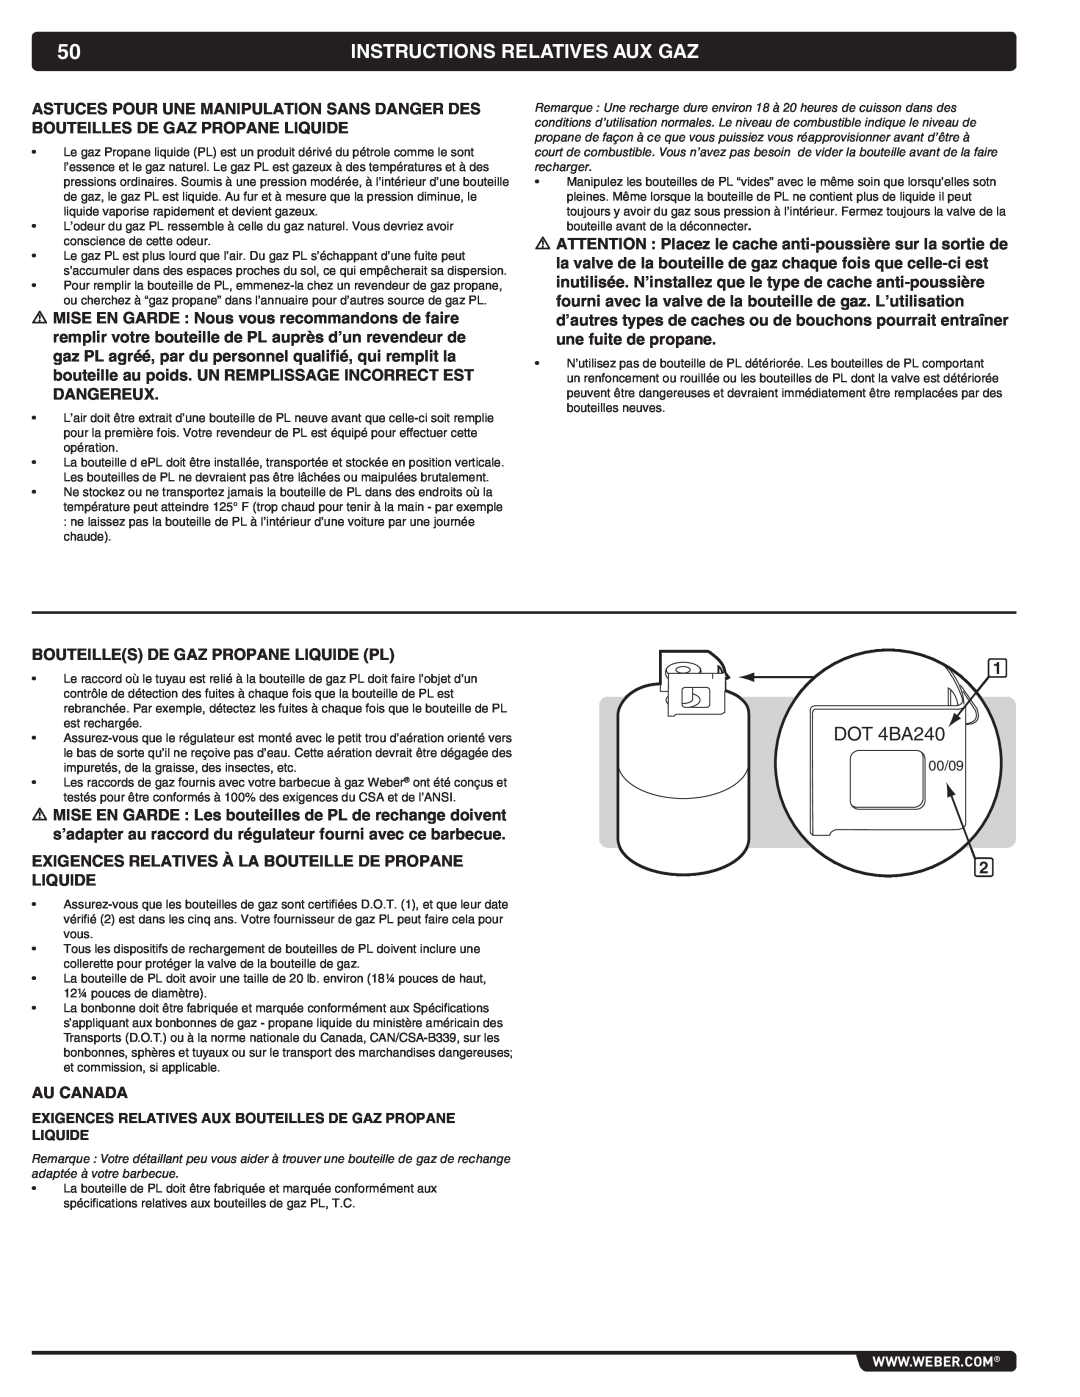 Weber 56069 manual Instructions Relatives Aux Gaz, DOT 4BA240 